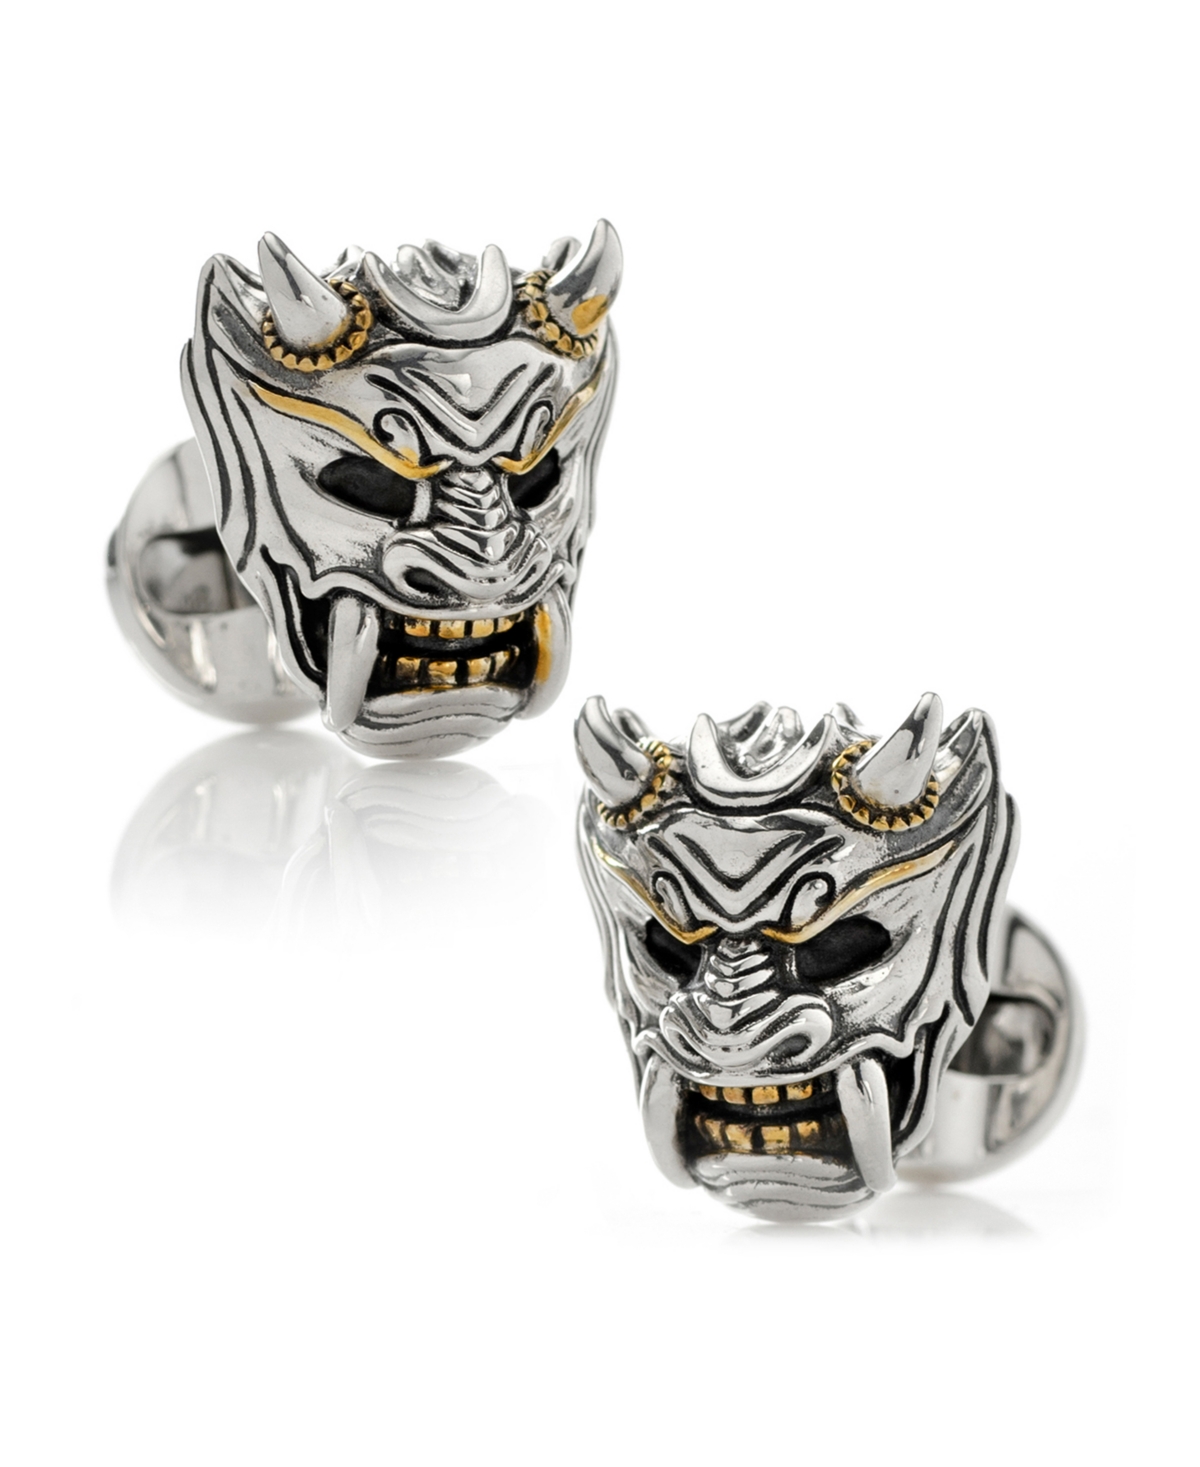 Ox & Bull Trading Co. Men's Samurai Mask Cufflinks In Silver